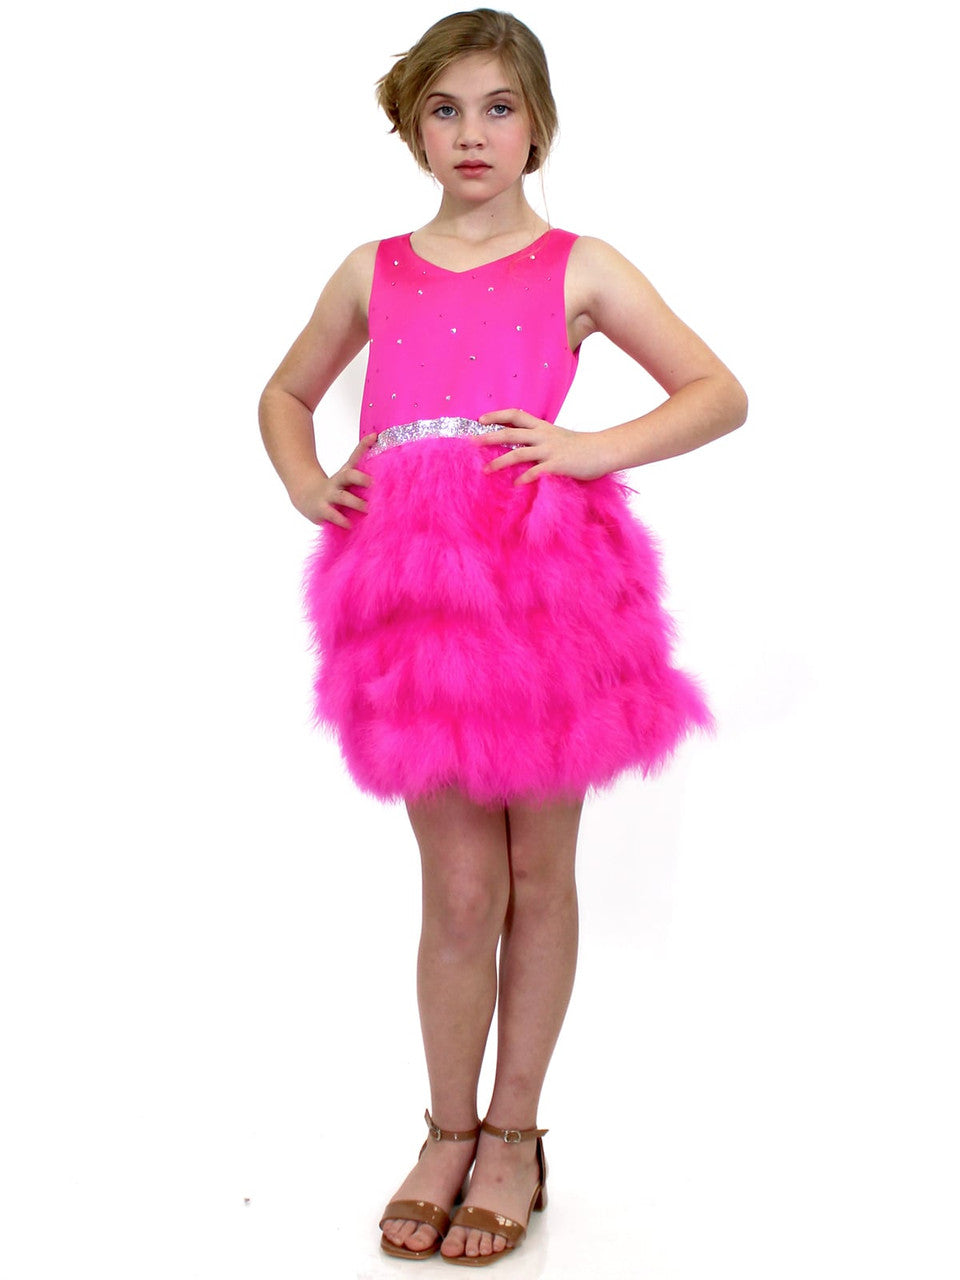 Marc-Defant-5072-Hot-Pink-Girls-and-Preteens-Dress-short-feather-skirt-Pageant-wear